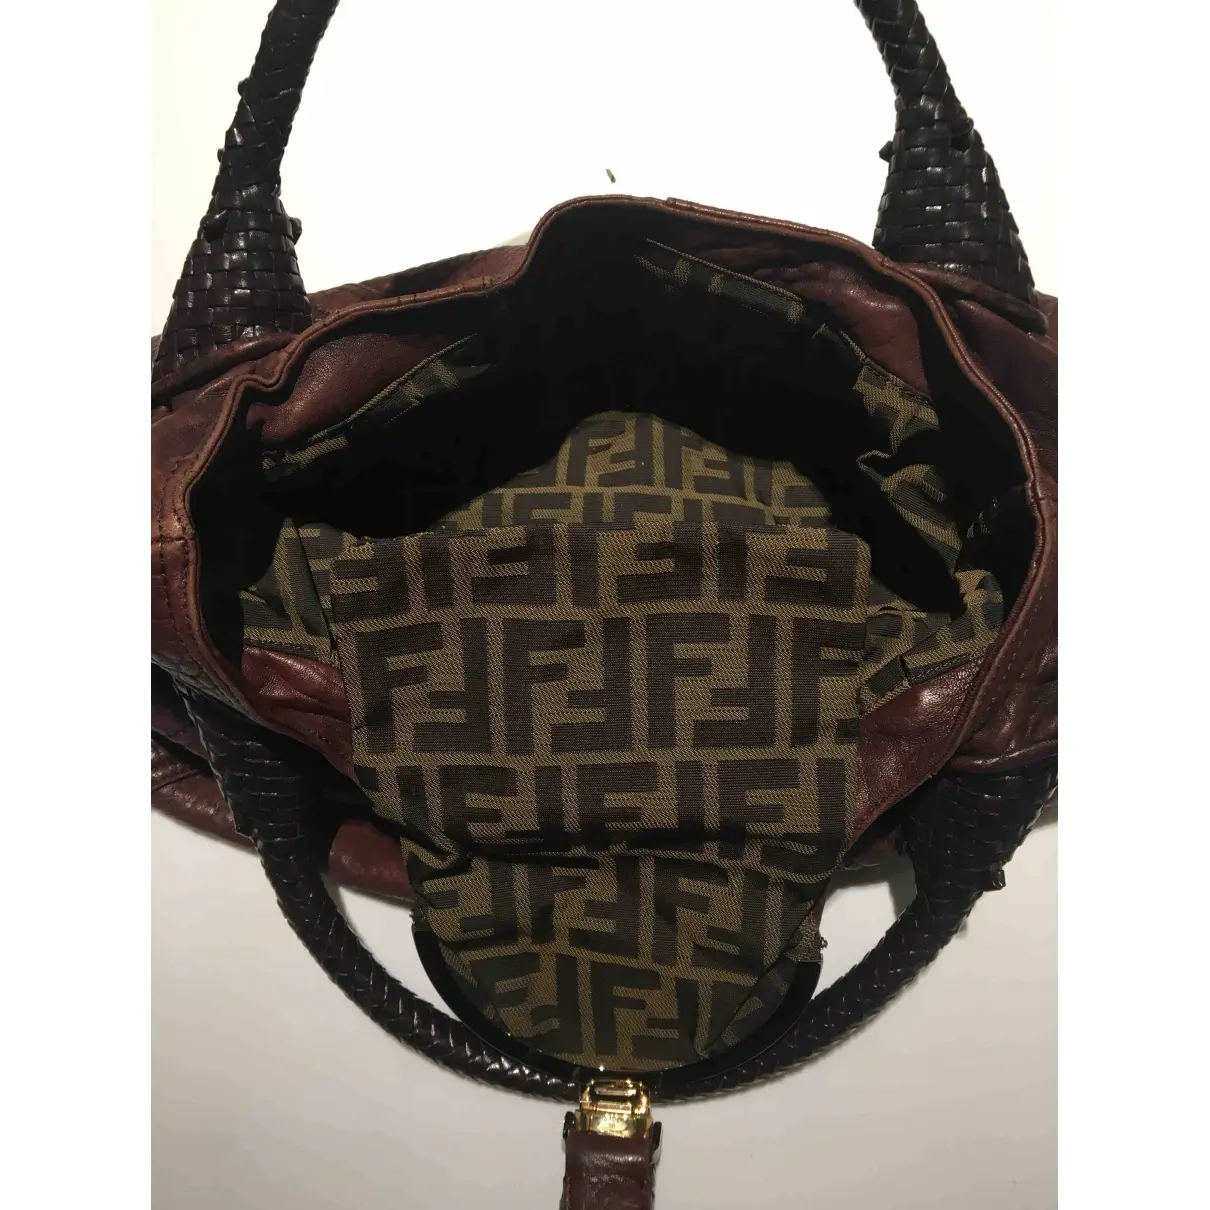 Buy Fendi Spy leather handbag online